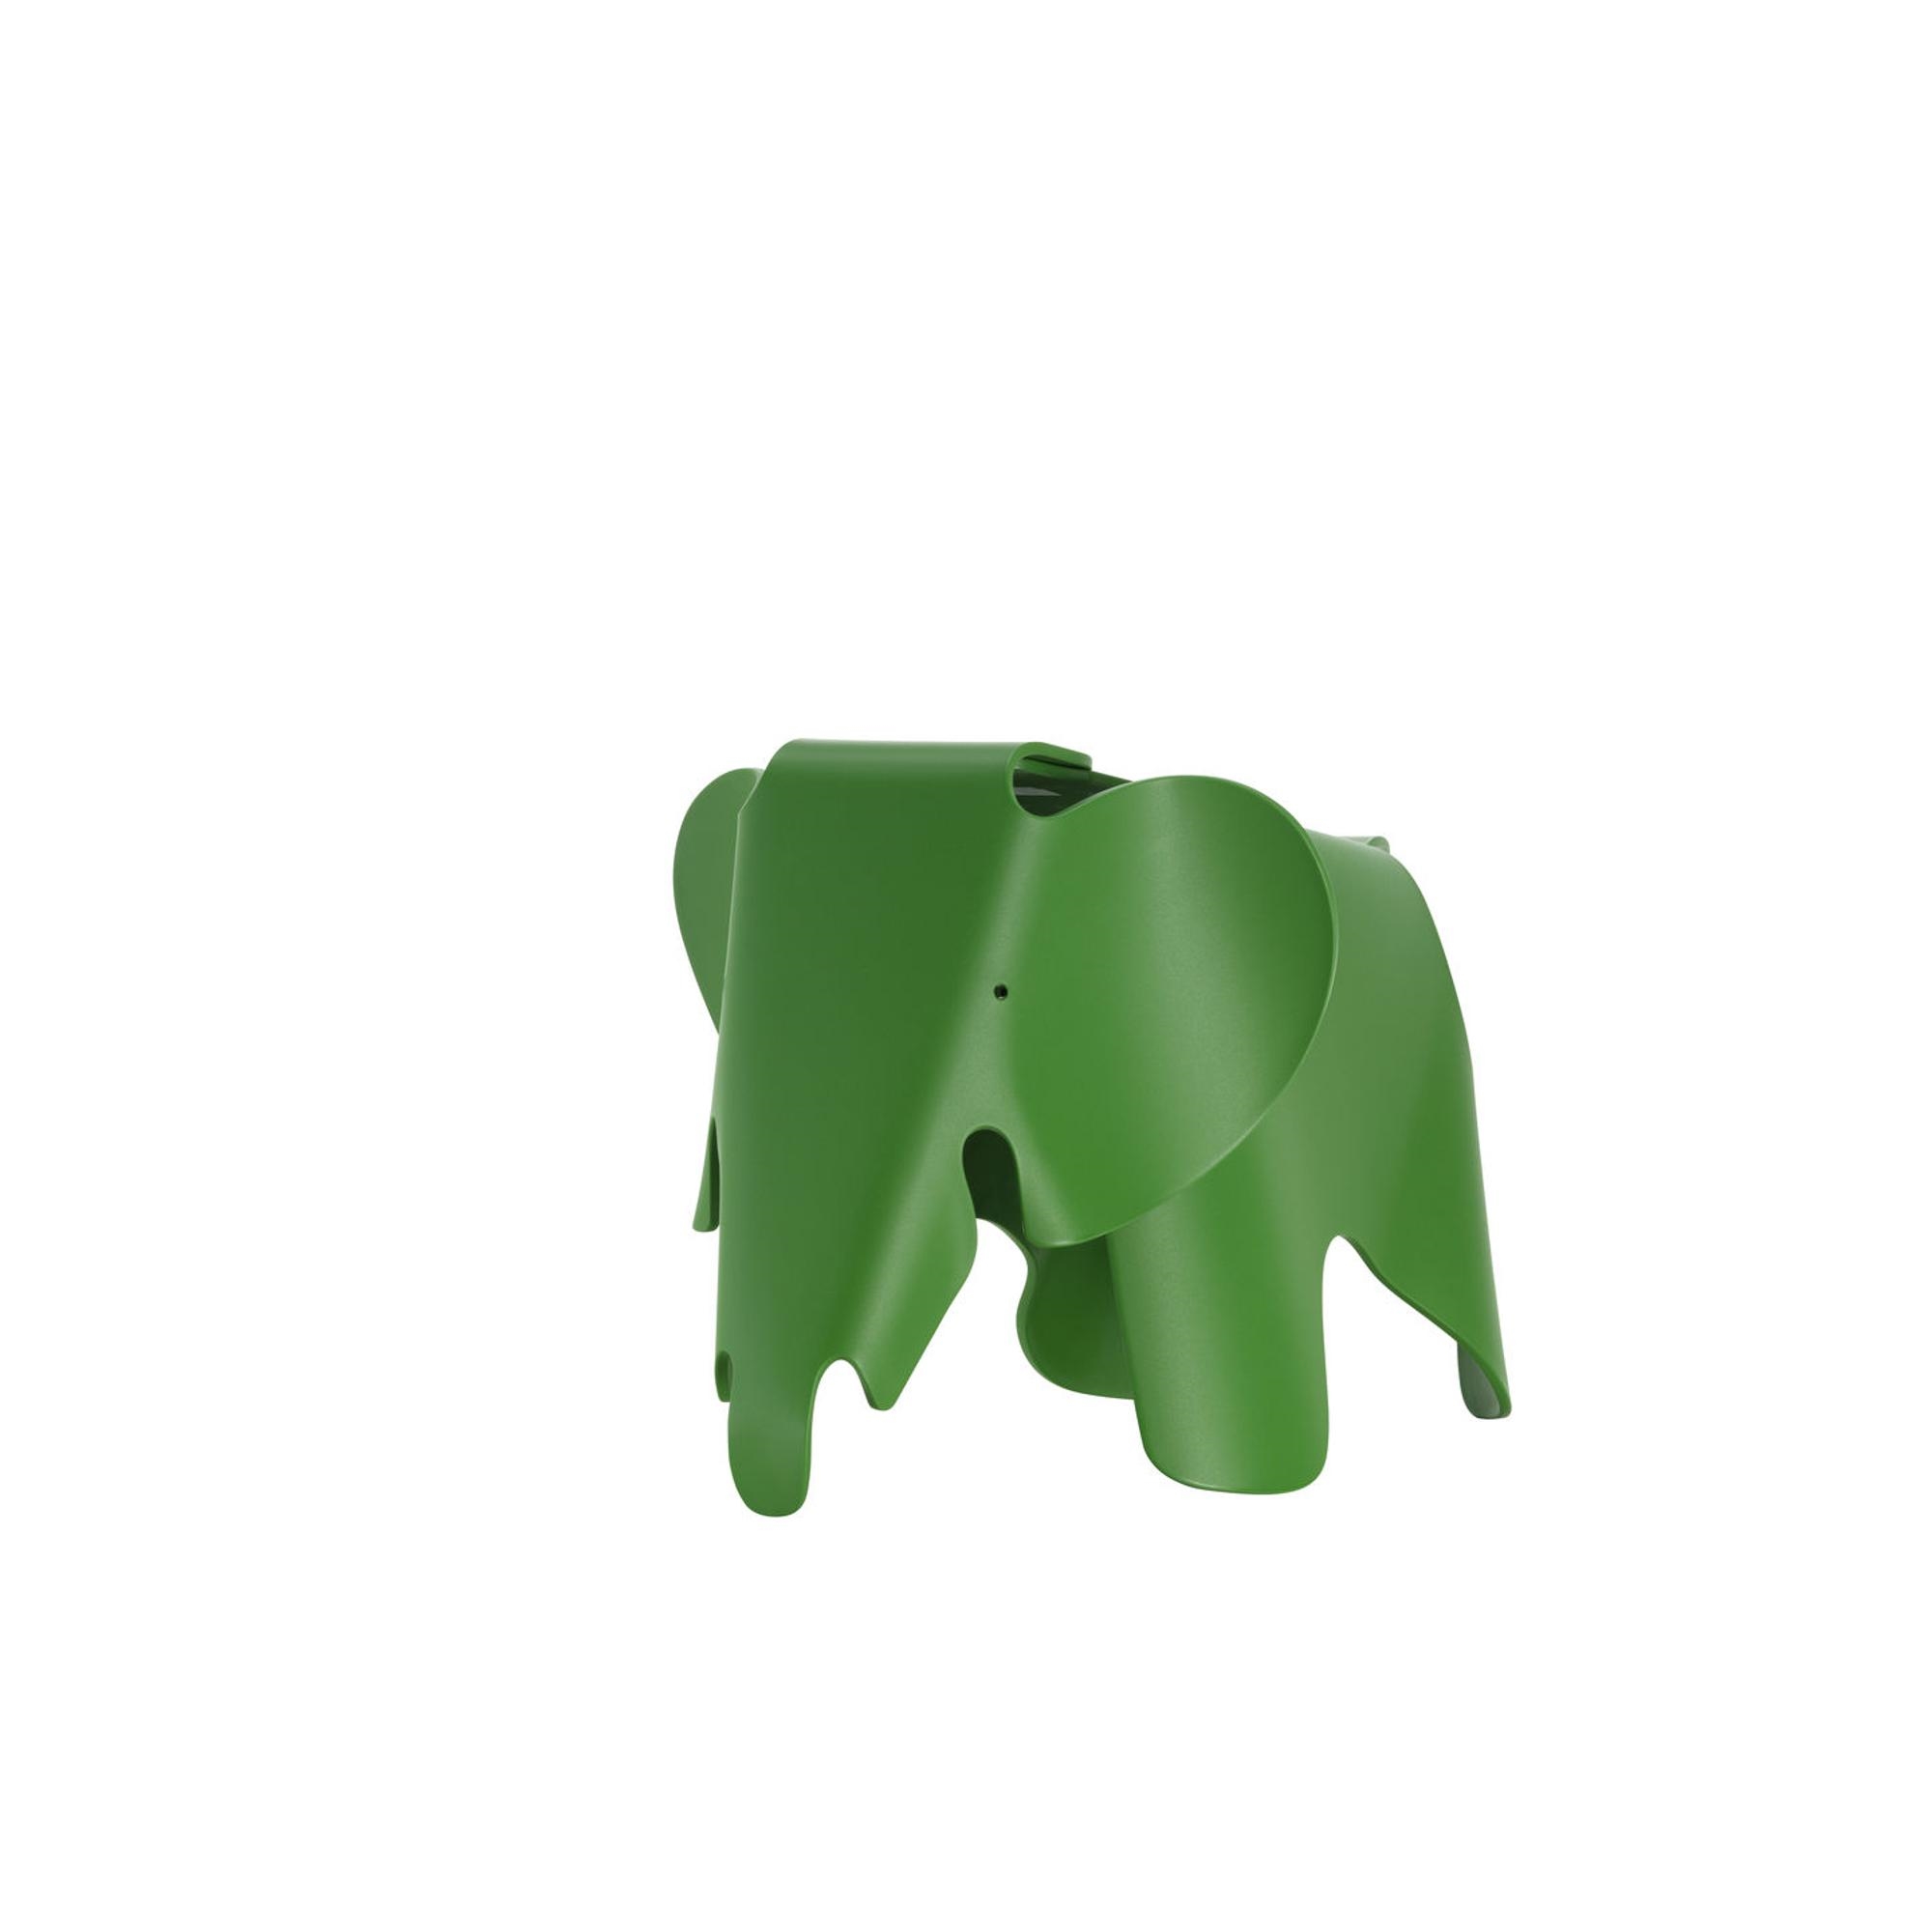 Eames Elephant Stool Klein Groen van Vitra - Gratis